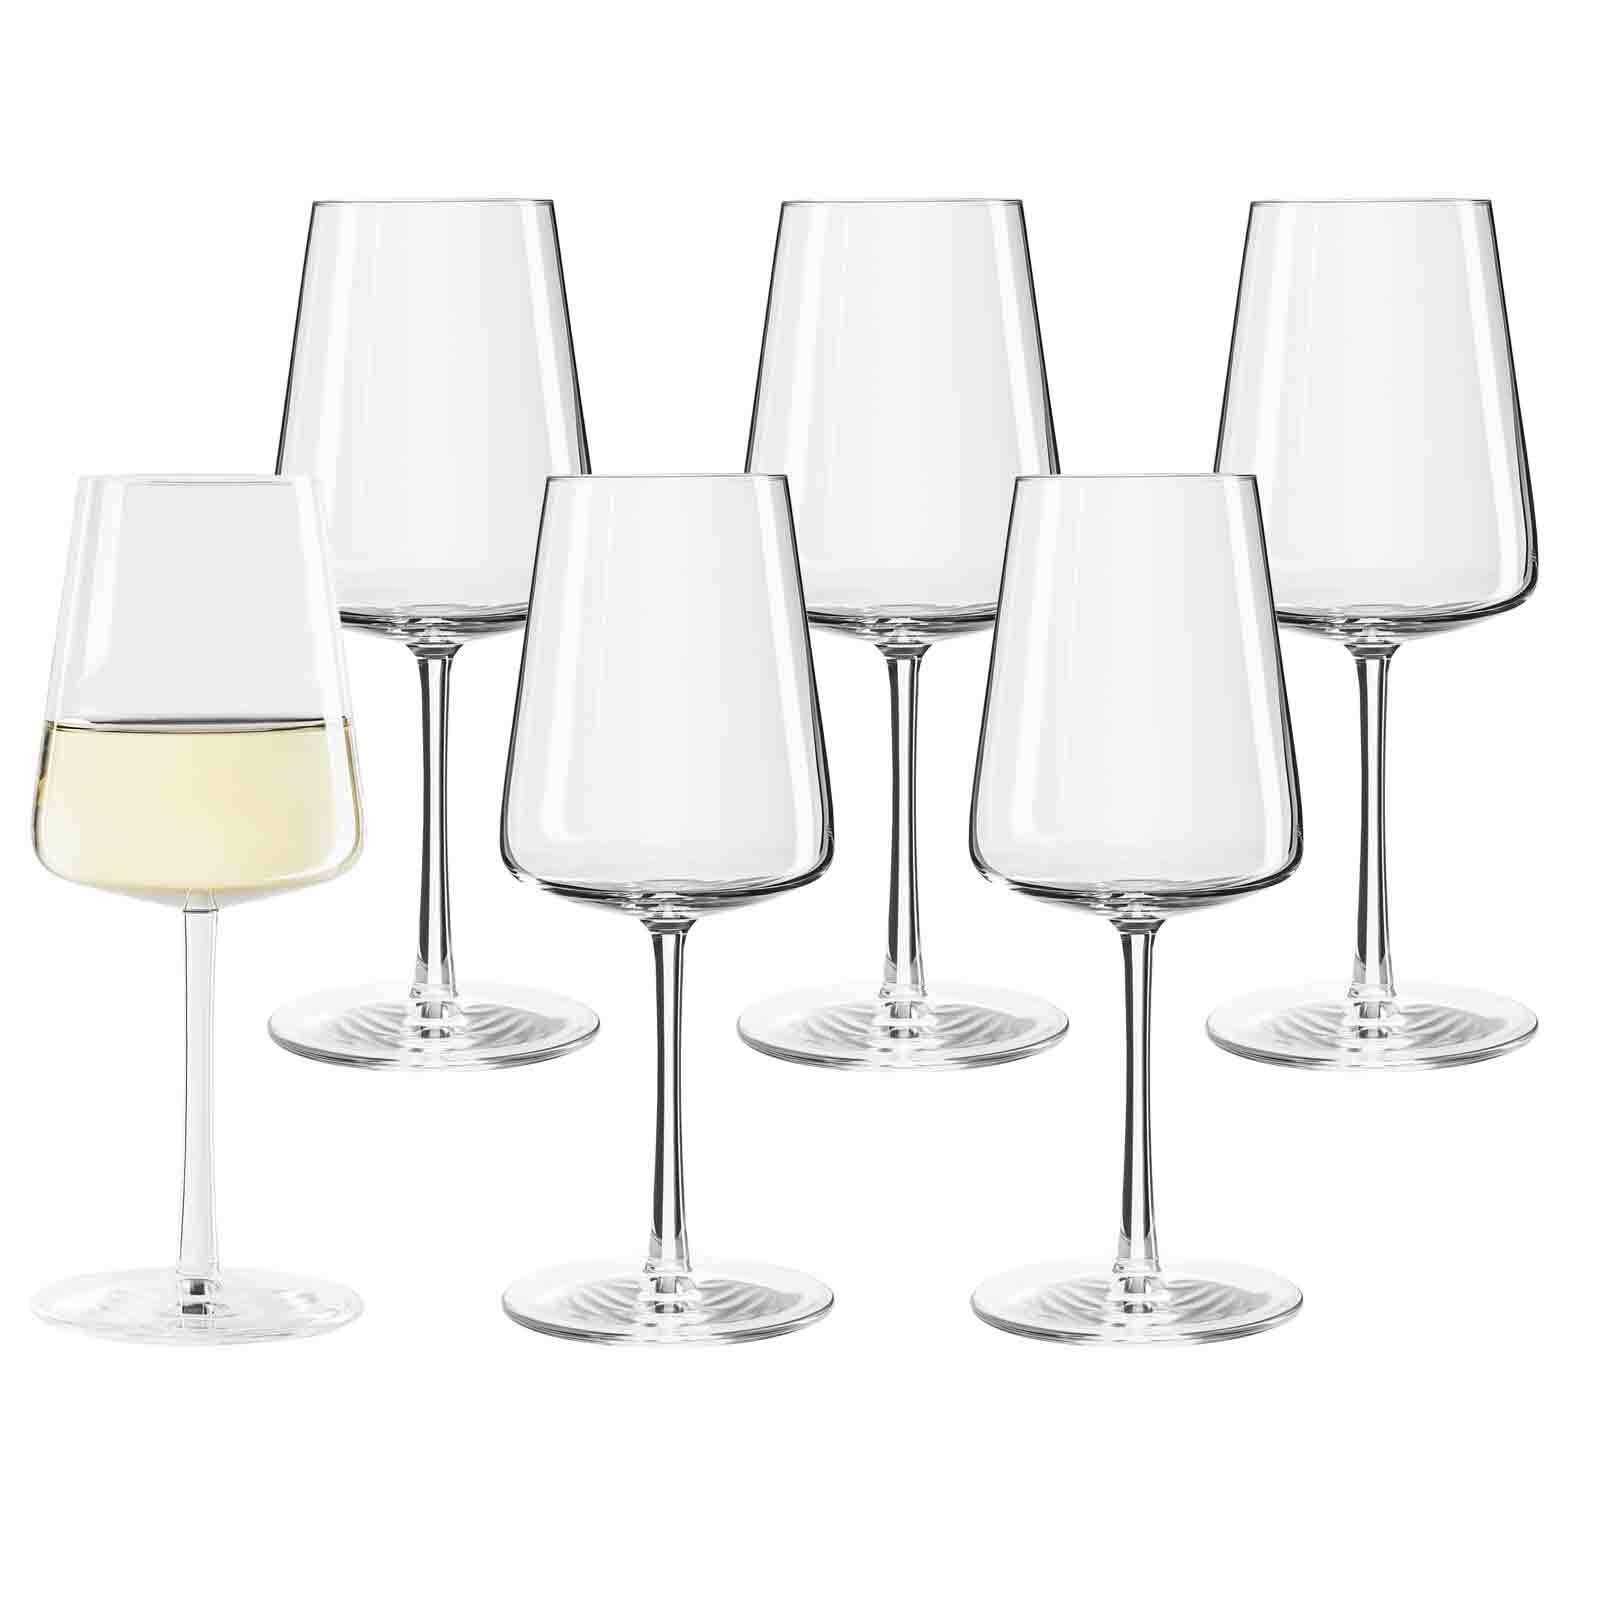 Stölzle Weißweinglas Power Келихи для білого вина 400 ml 6er Set, Glas